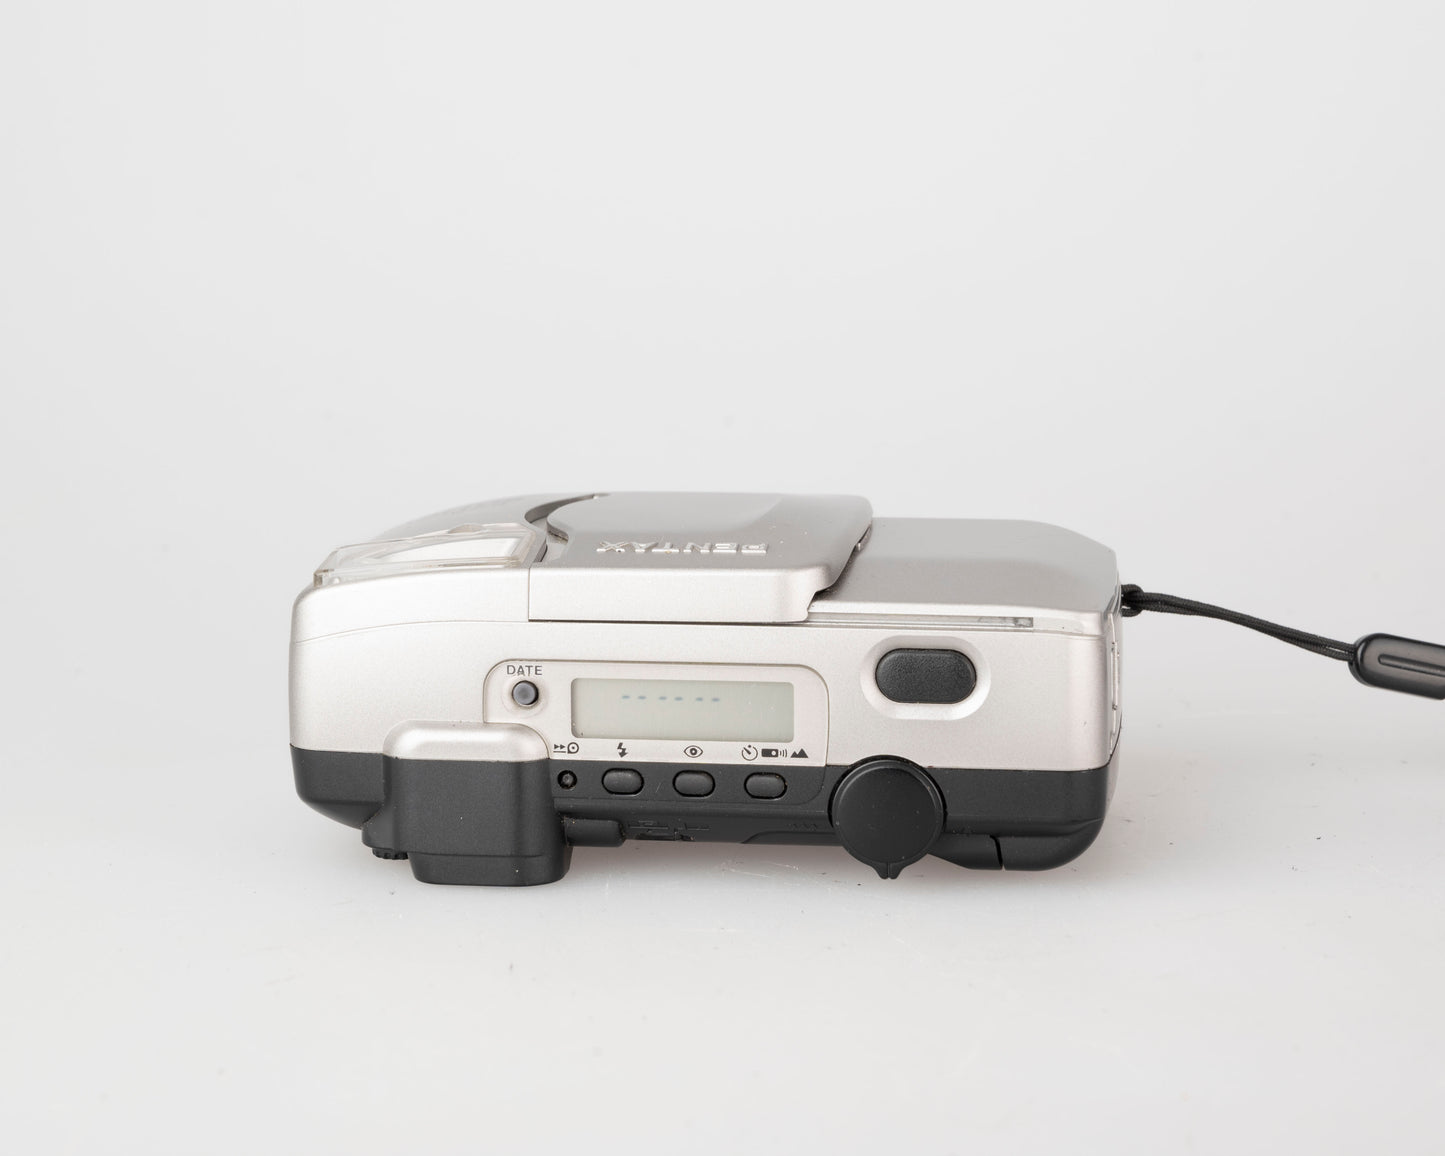 Pentax Espio 90MC ultra-compact 35mm camera w/ case (serial 9136785)